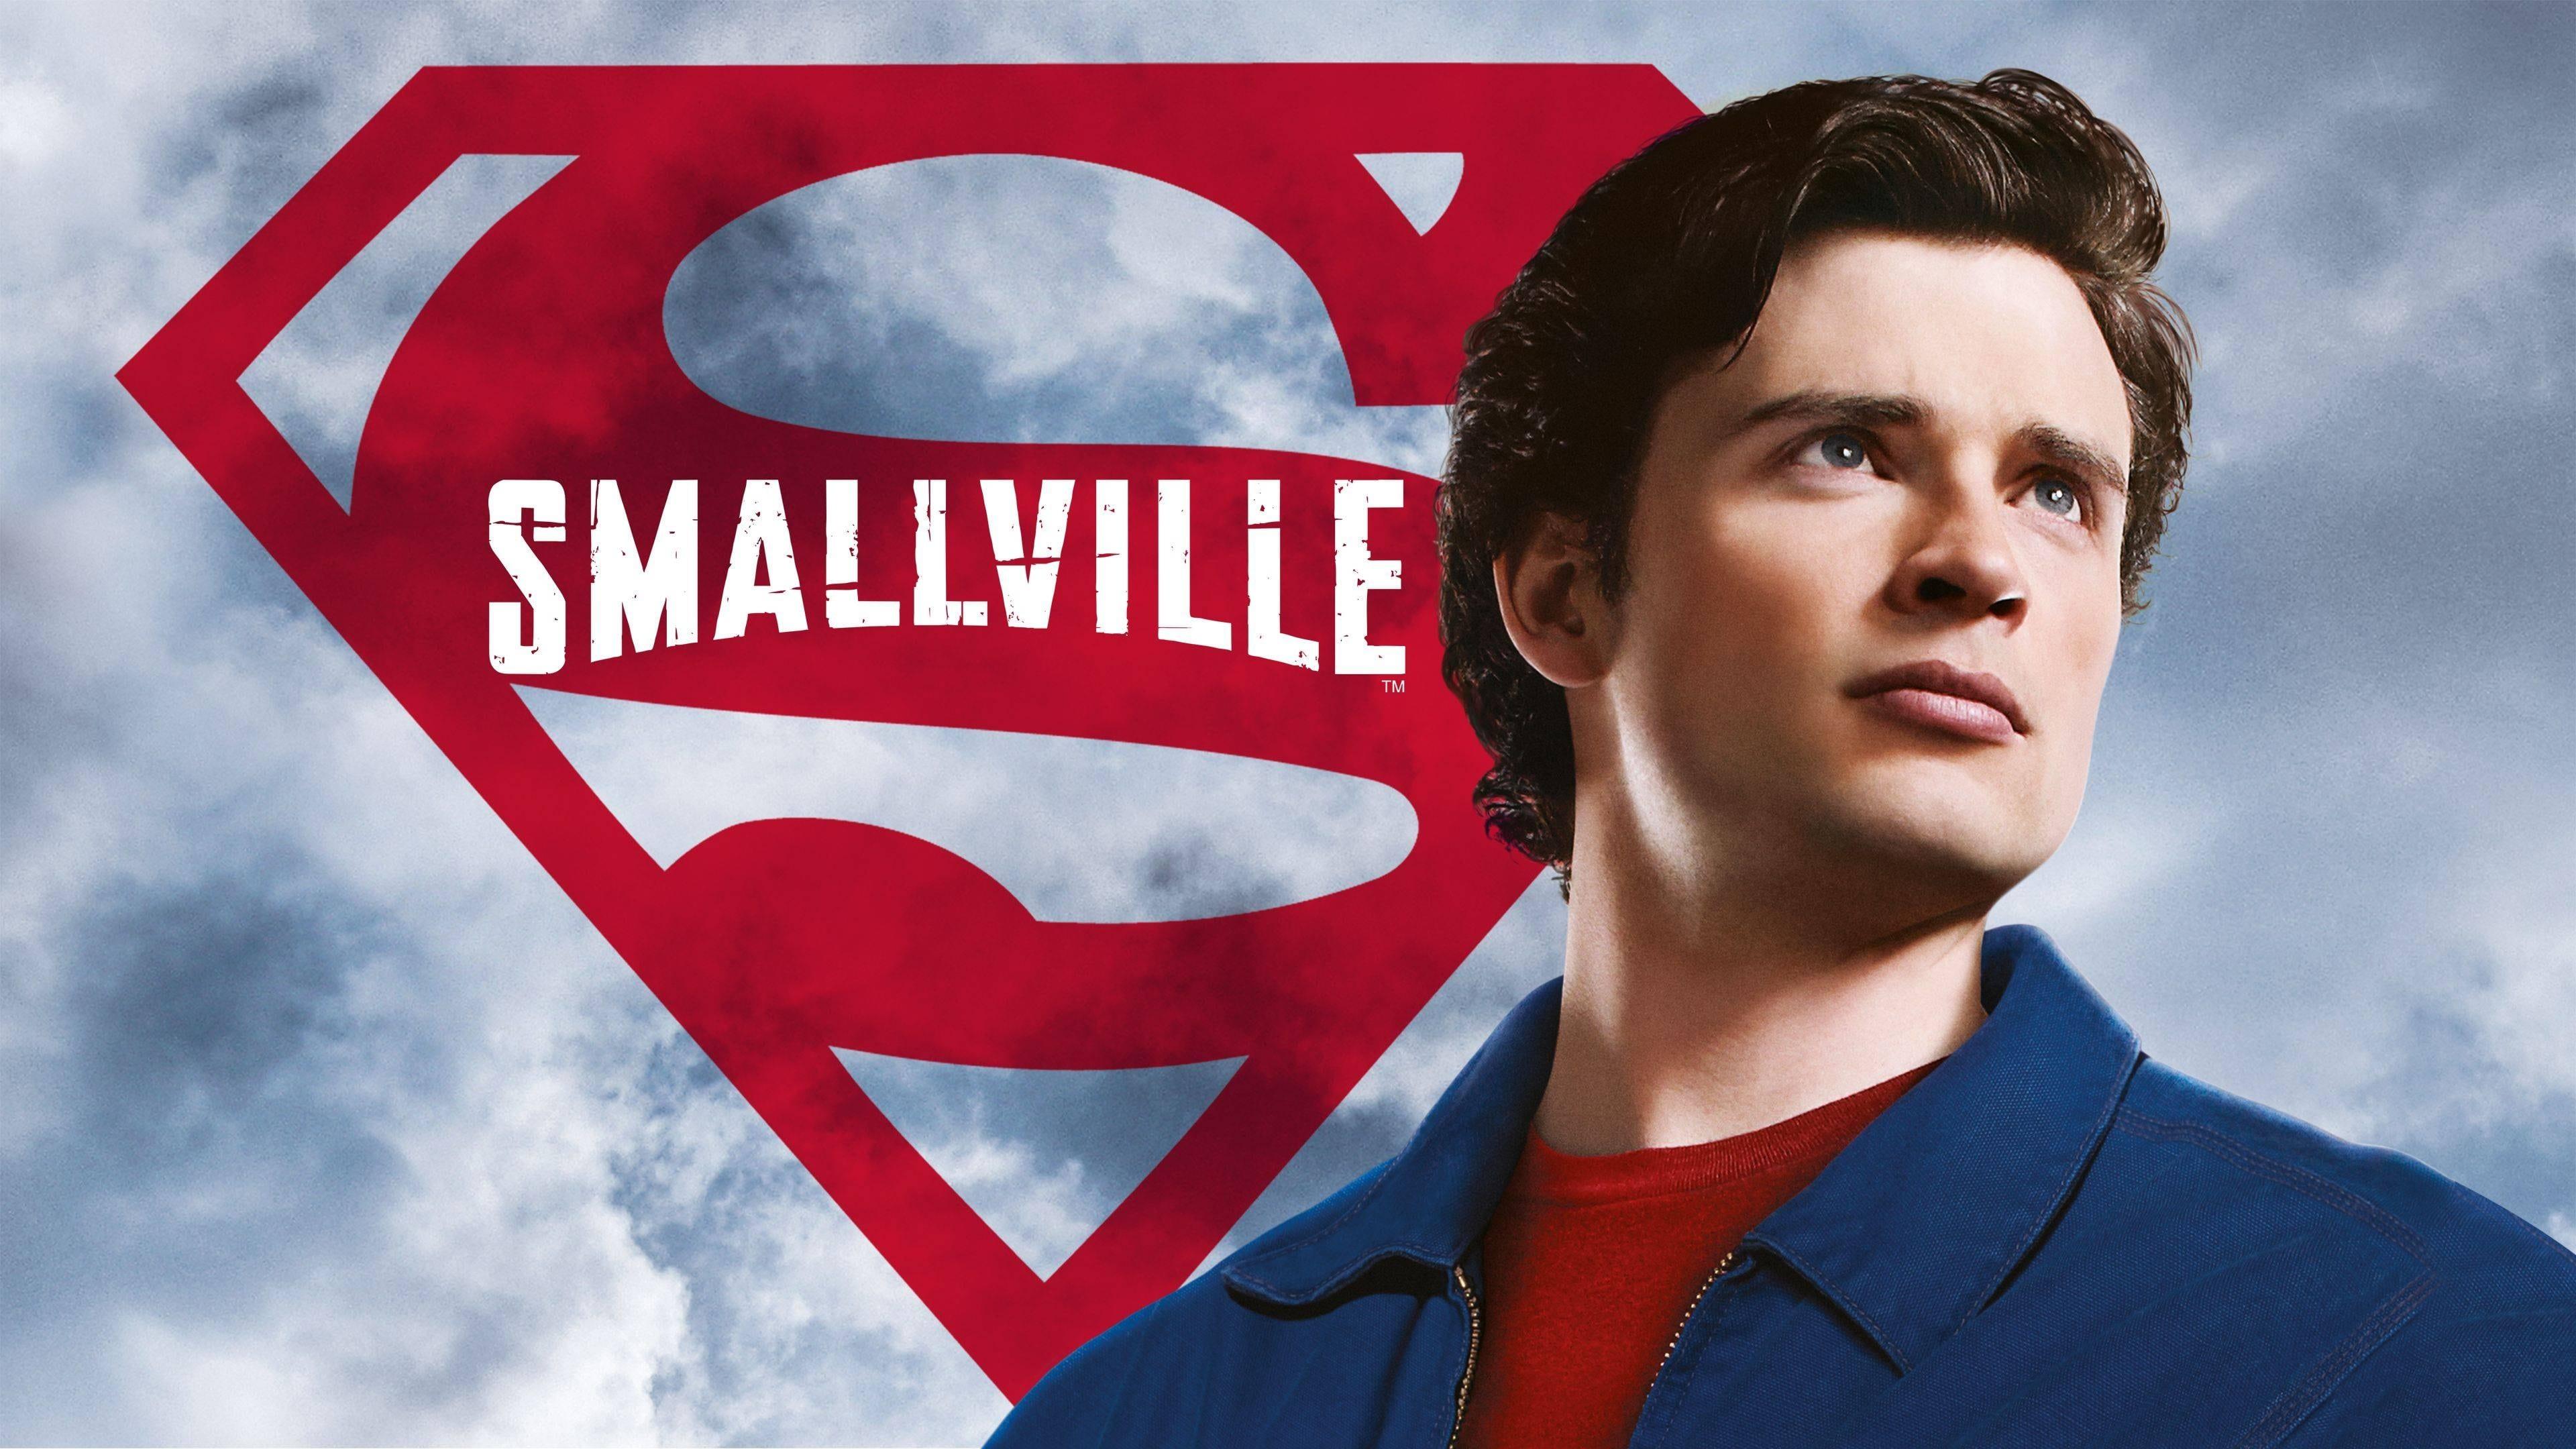 Smallville backdrop